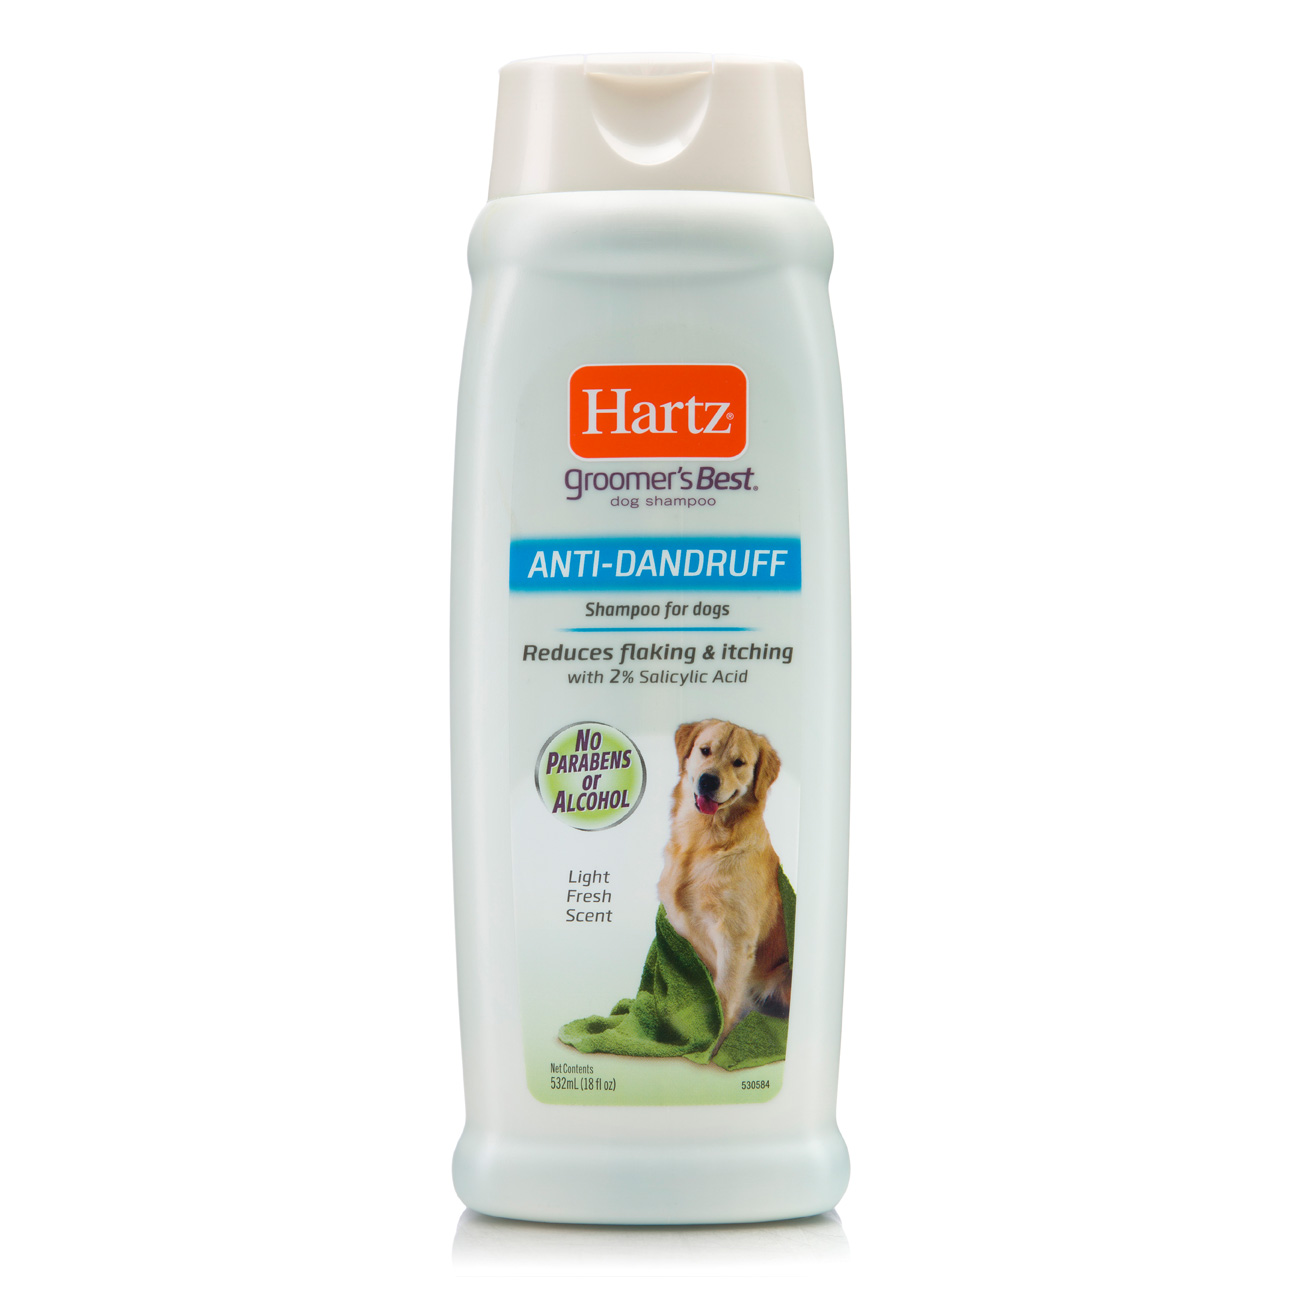 Dandruff shampoo for grooming dogs, no parabens, Hartz SKU 3270015463